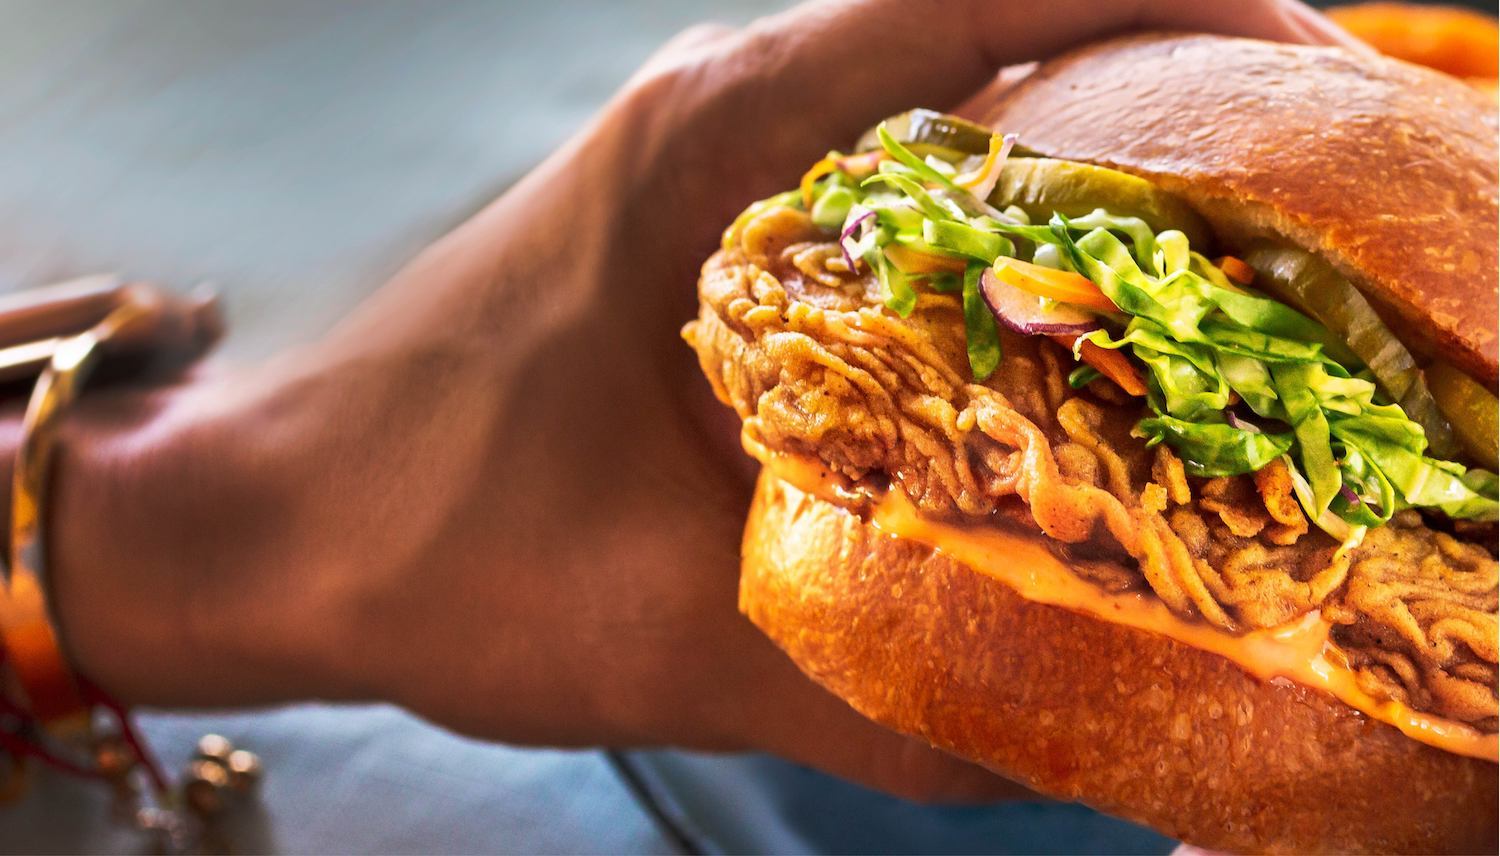 Mock chicken sandwich in hand from Upside Foods. May 2021